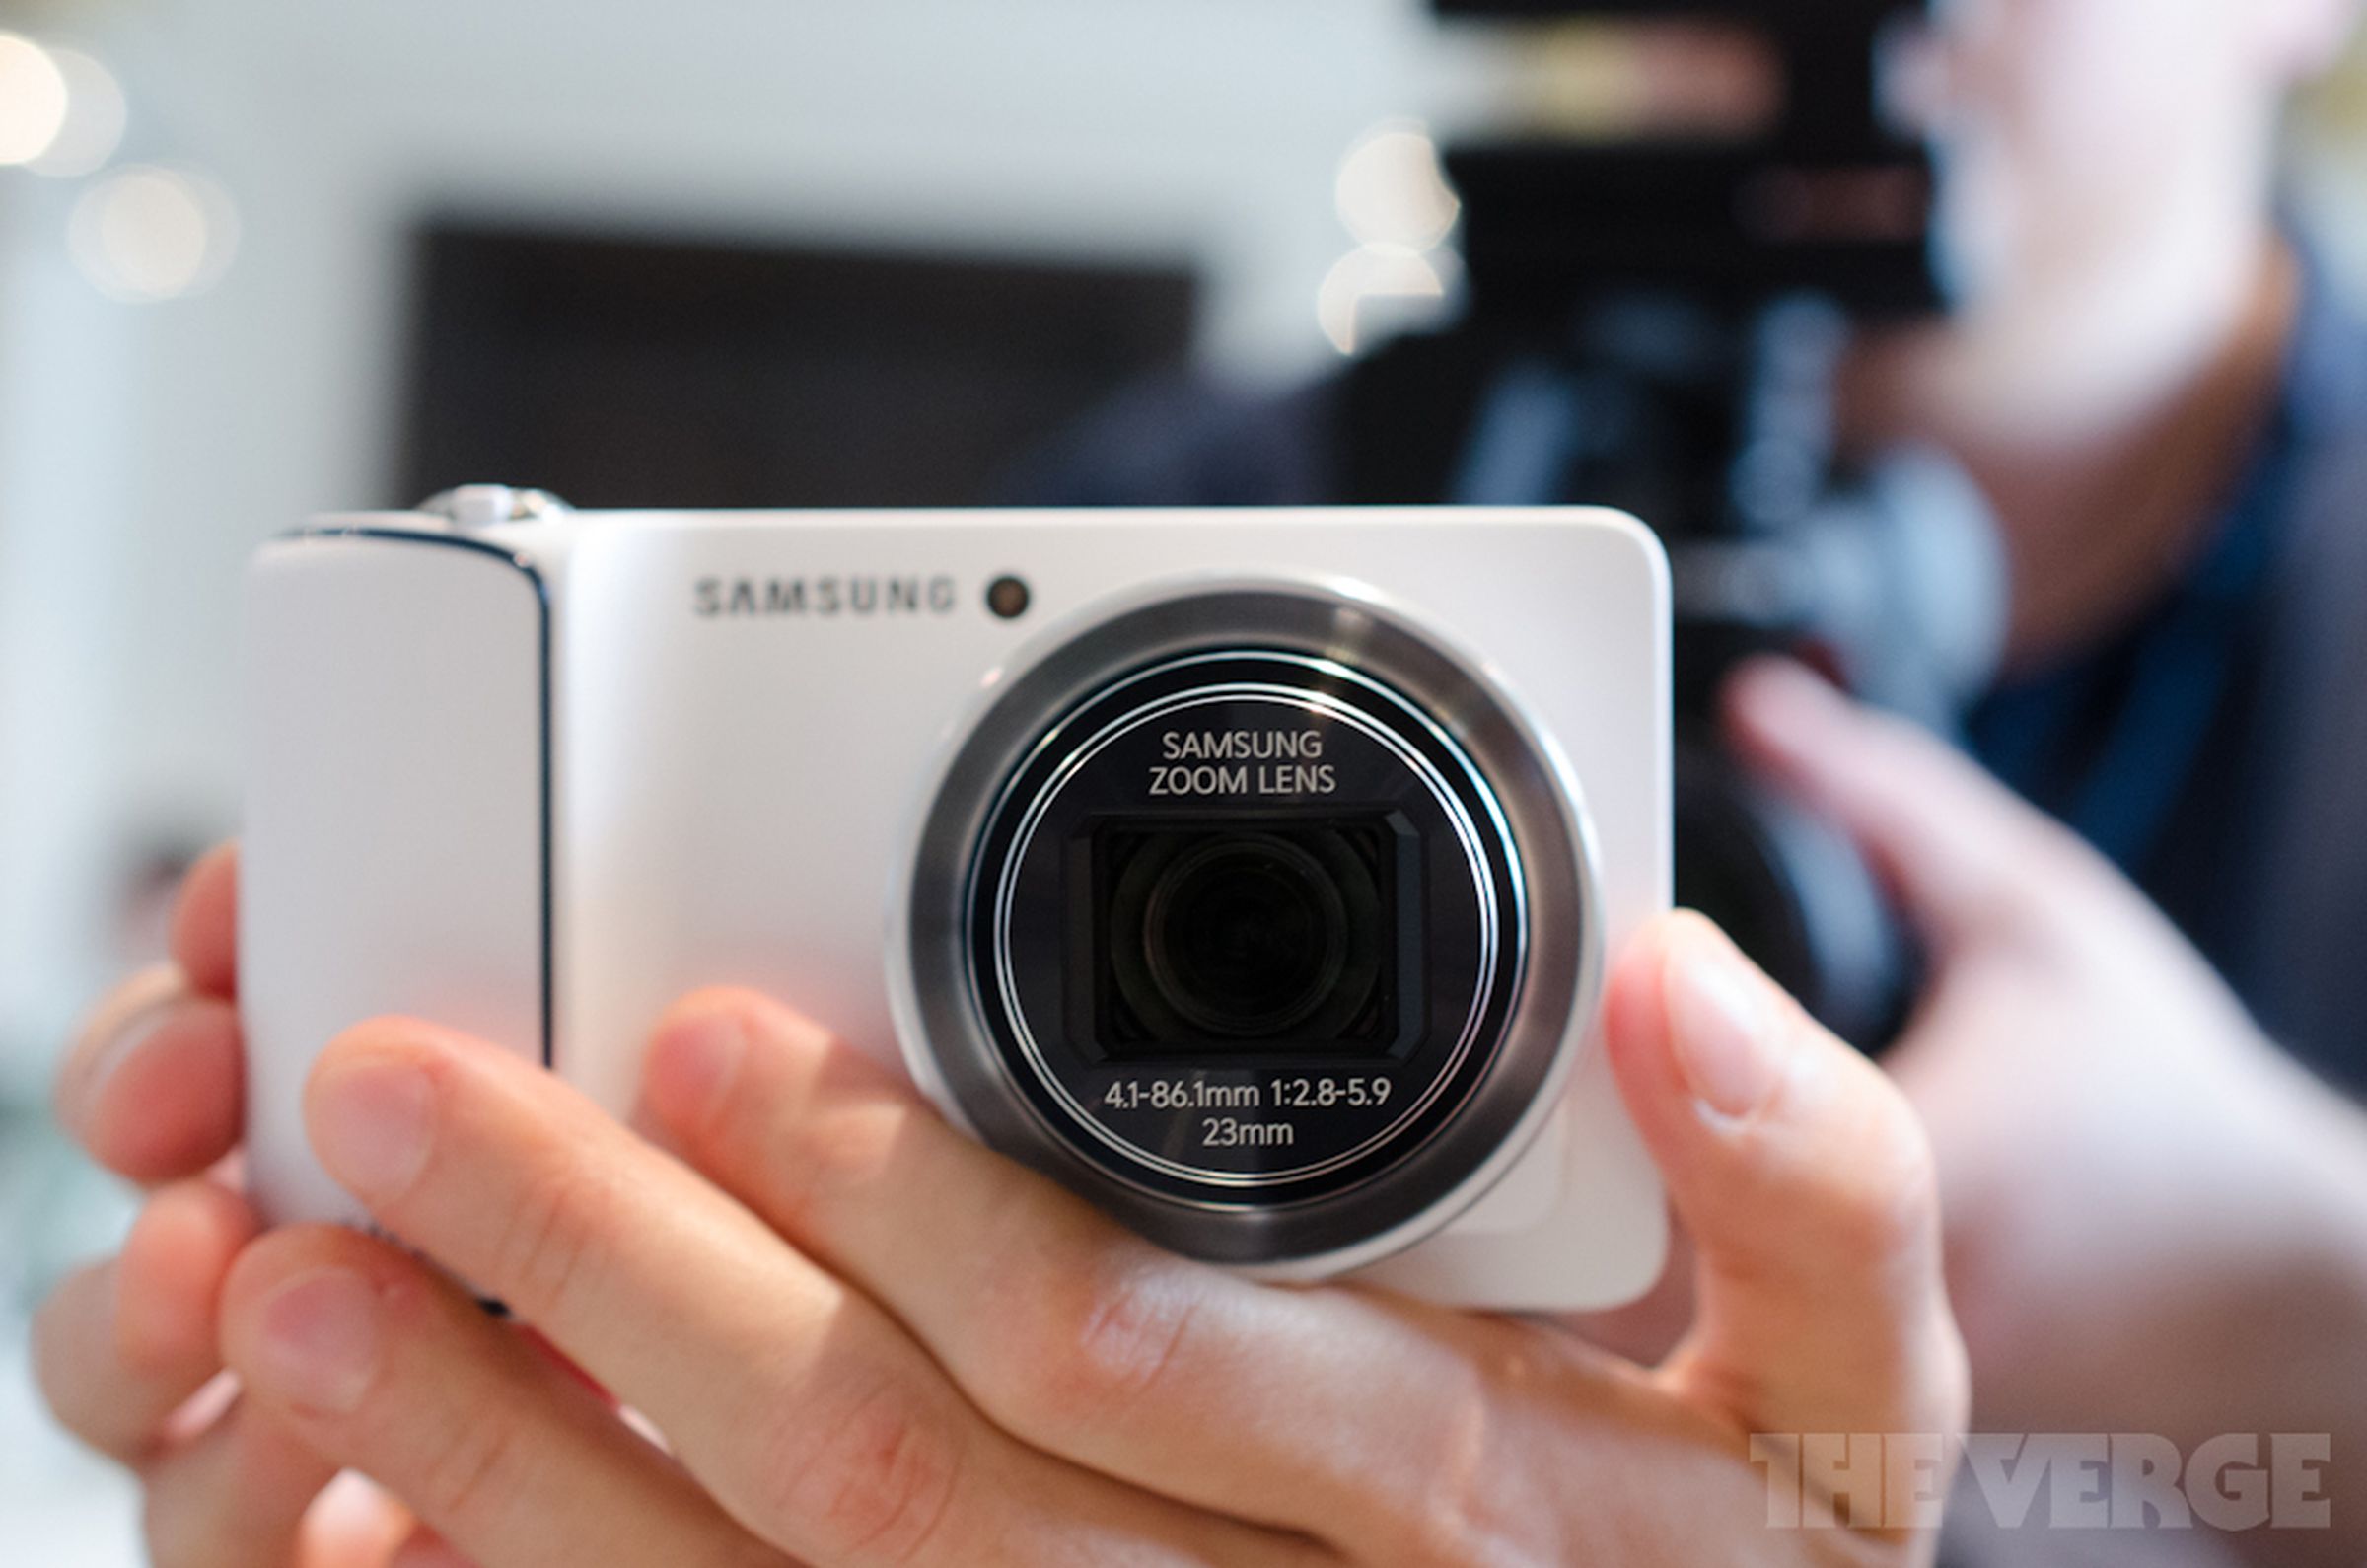 Samsung Galaxy Camera hands-on photos